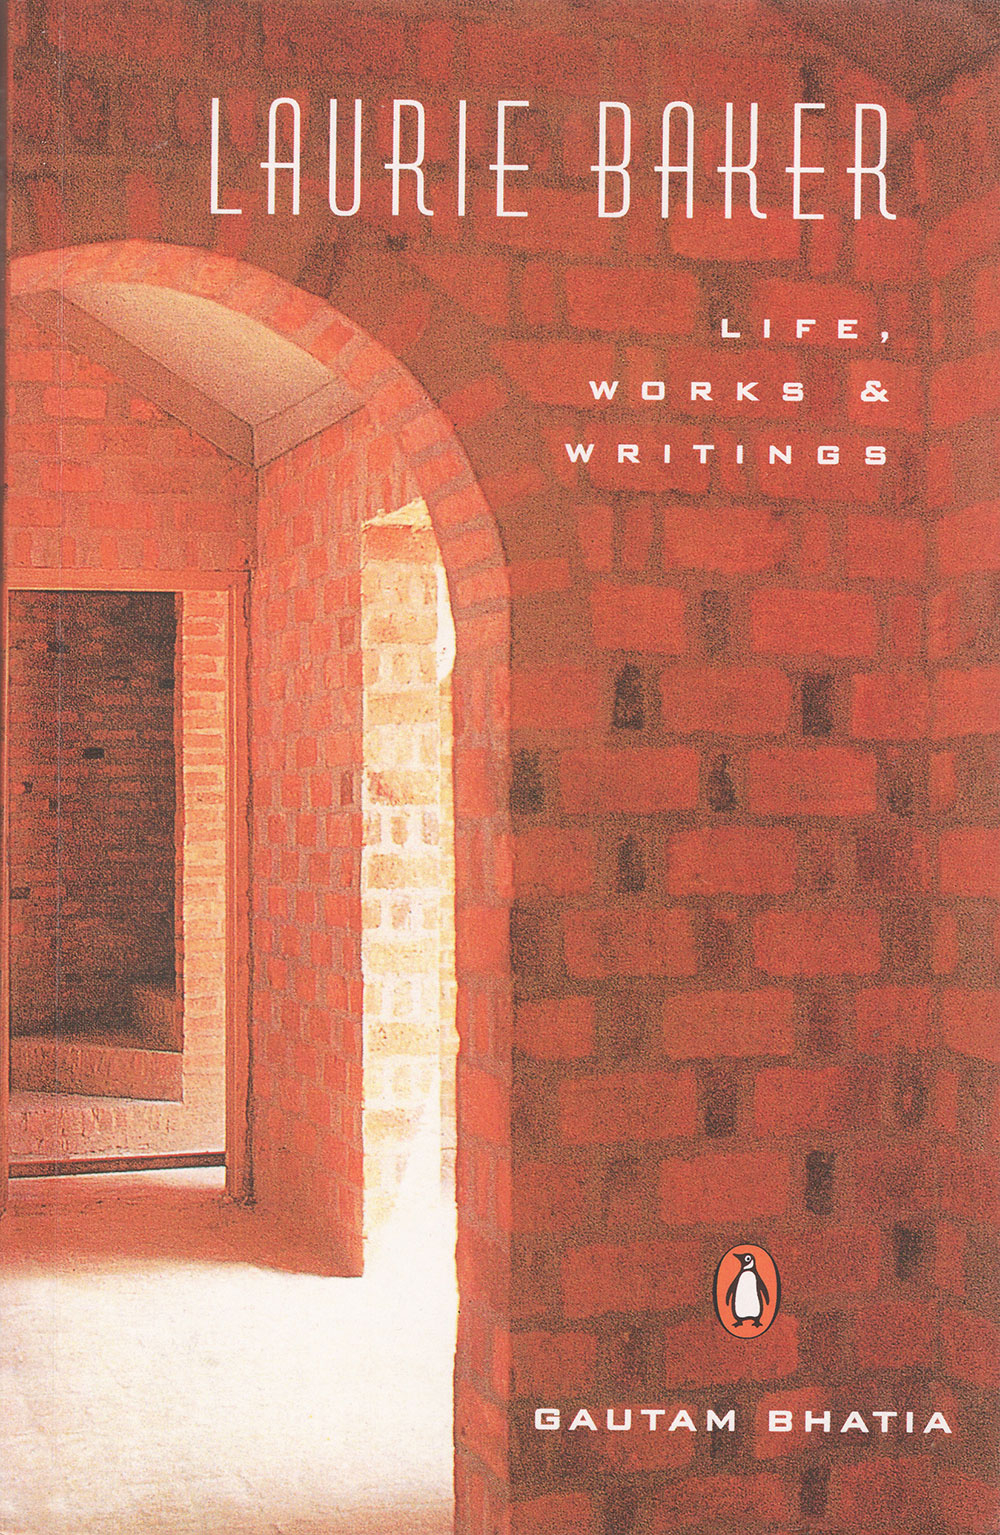 Laurie Baker: Life, Work, Writings